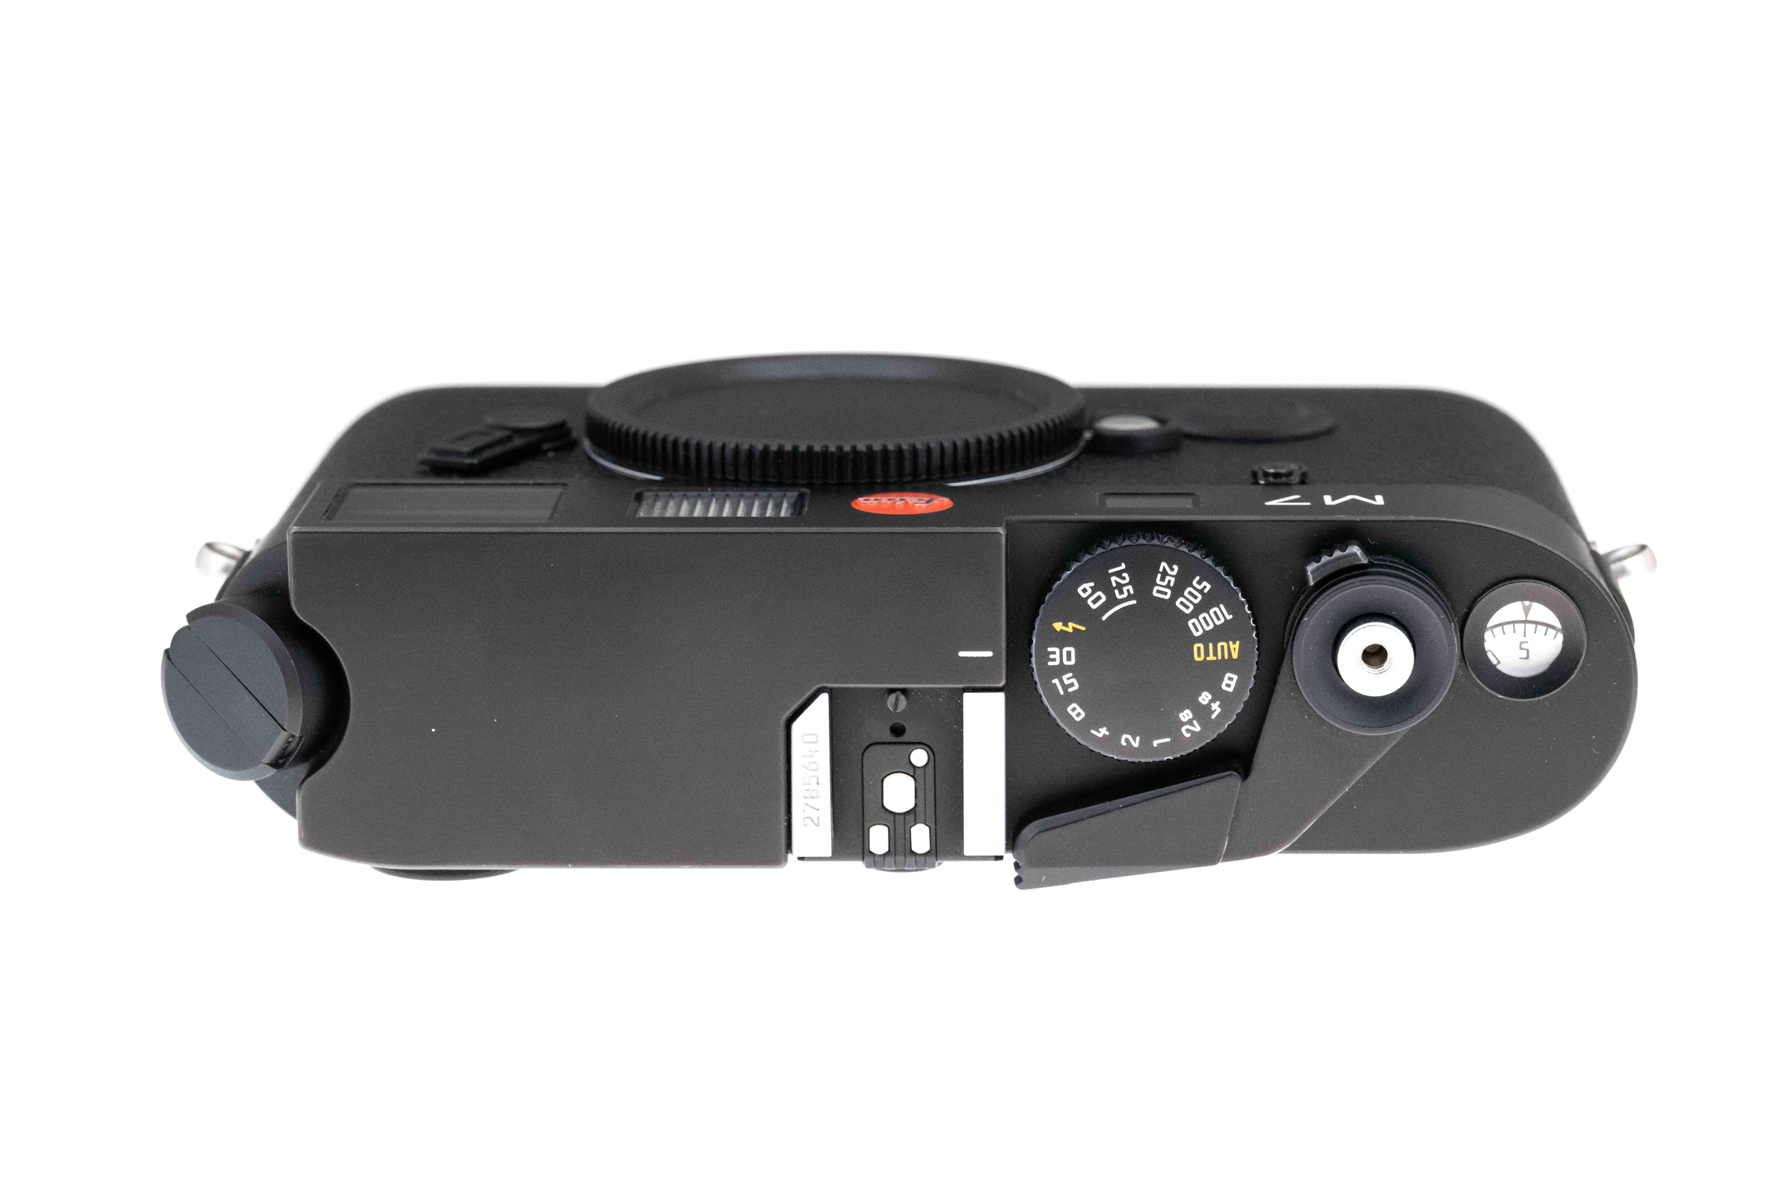 Leica M7 0,72 black